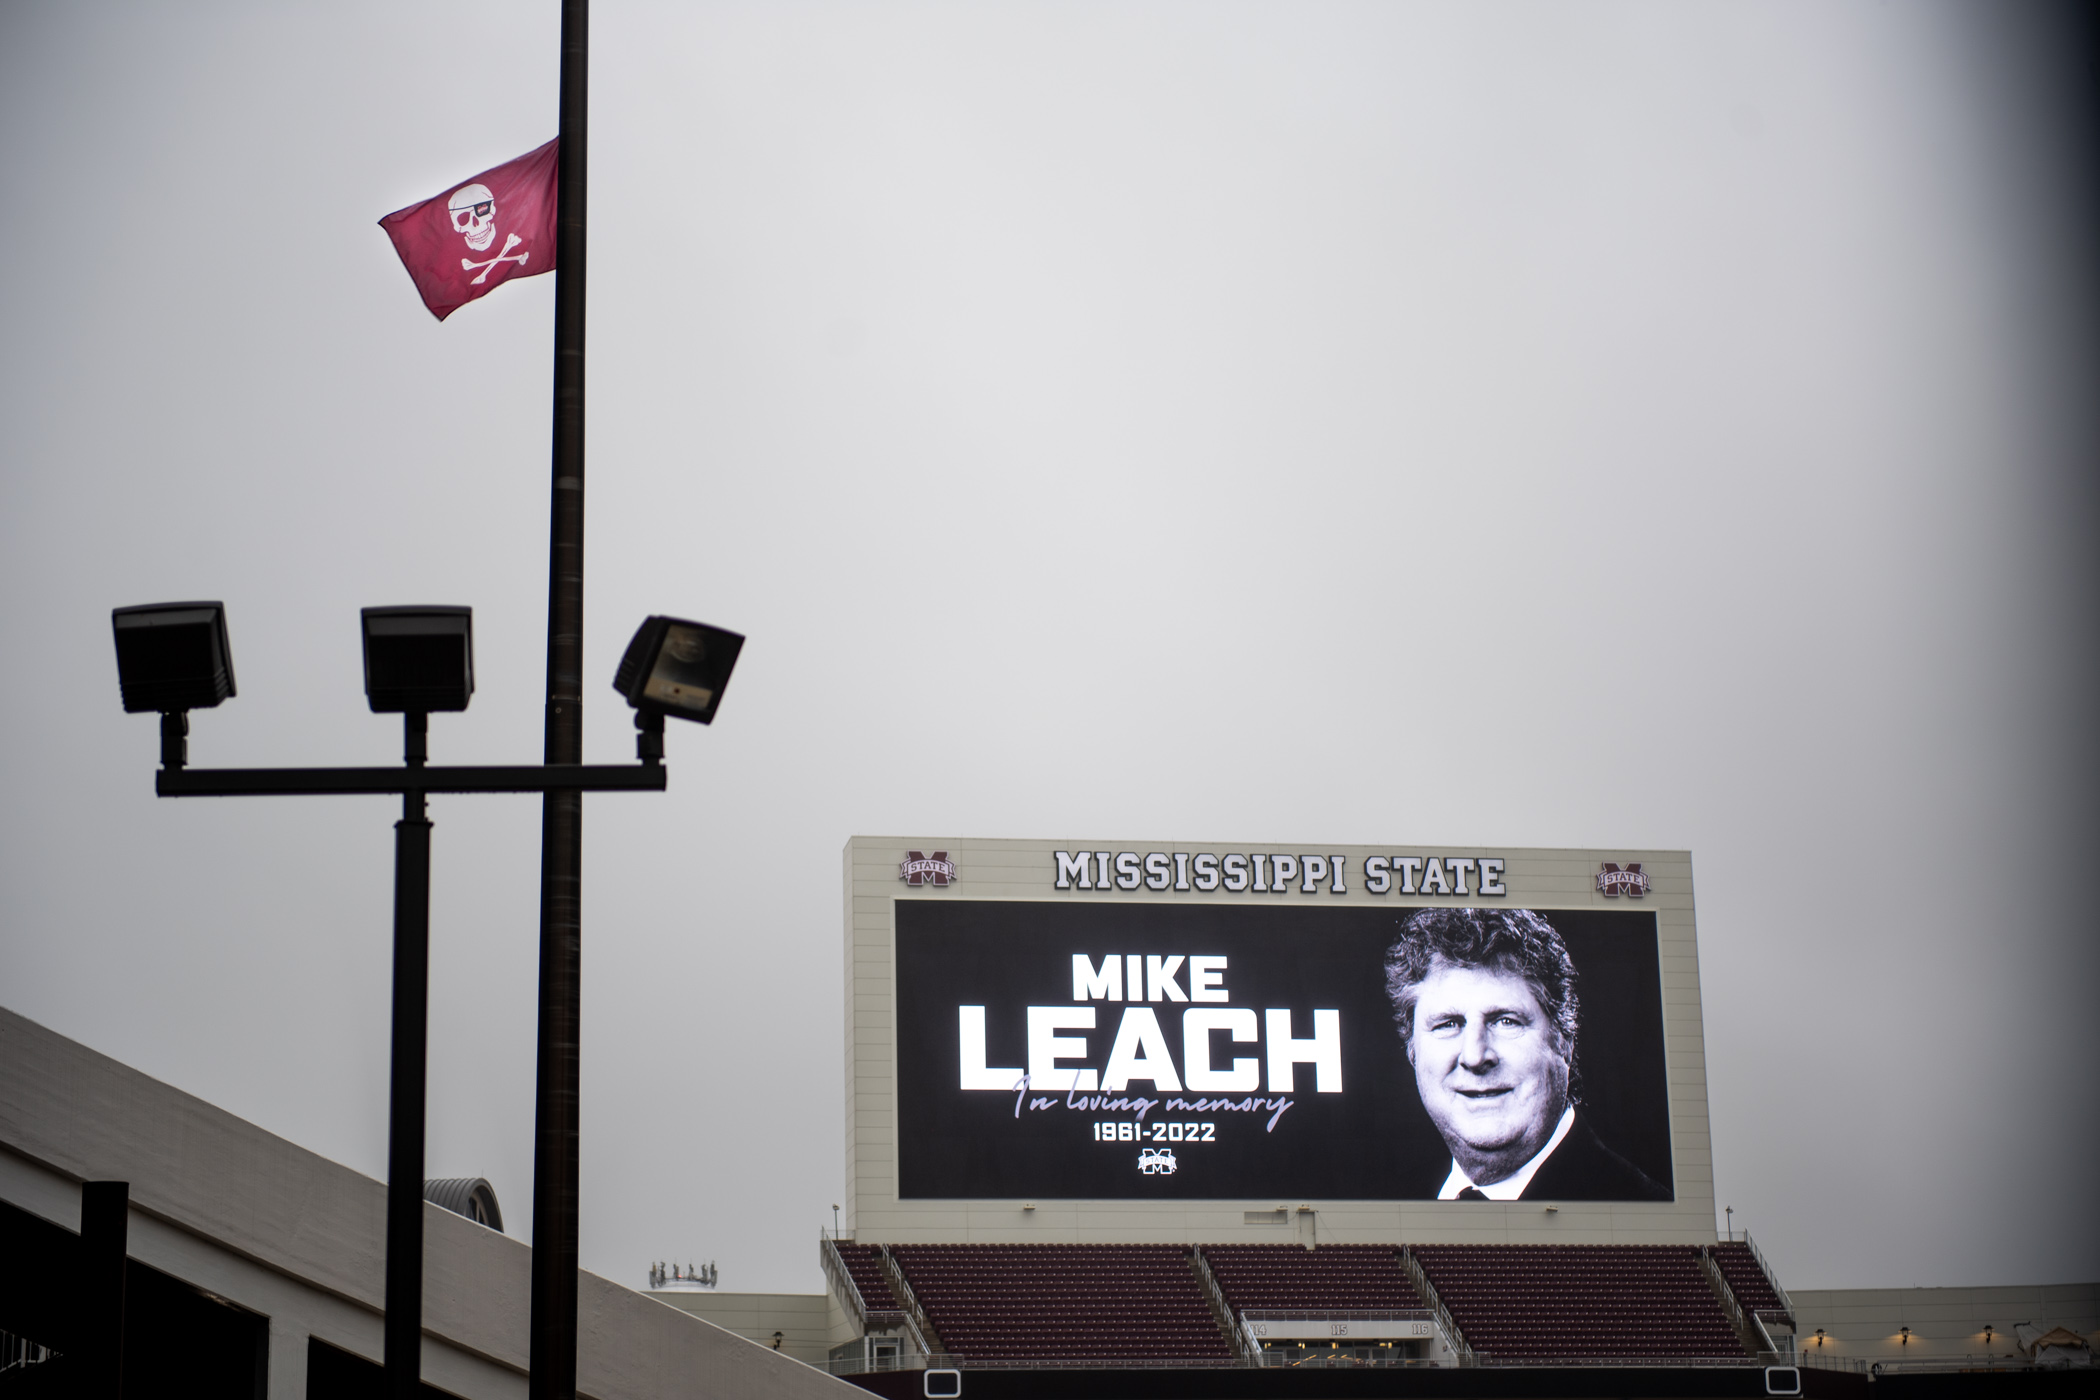 MSU Football displays a memorial message to Coach Mike Leach across the scoreboard of Davis Wade Stadium